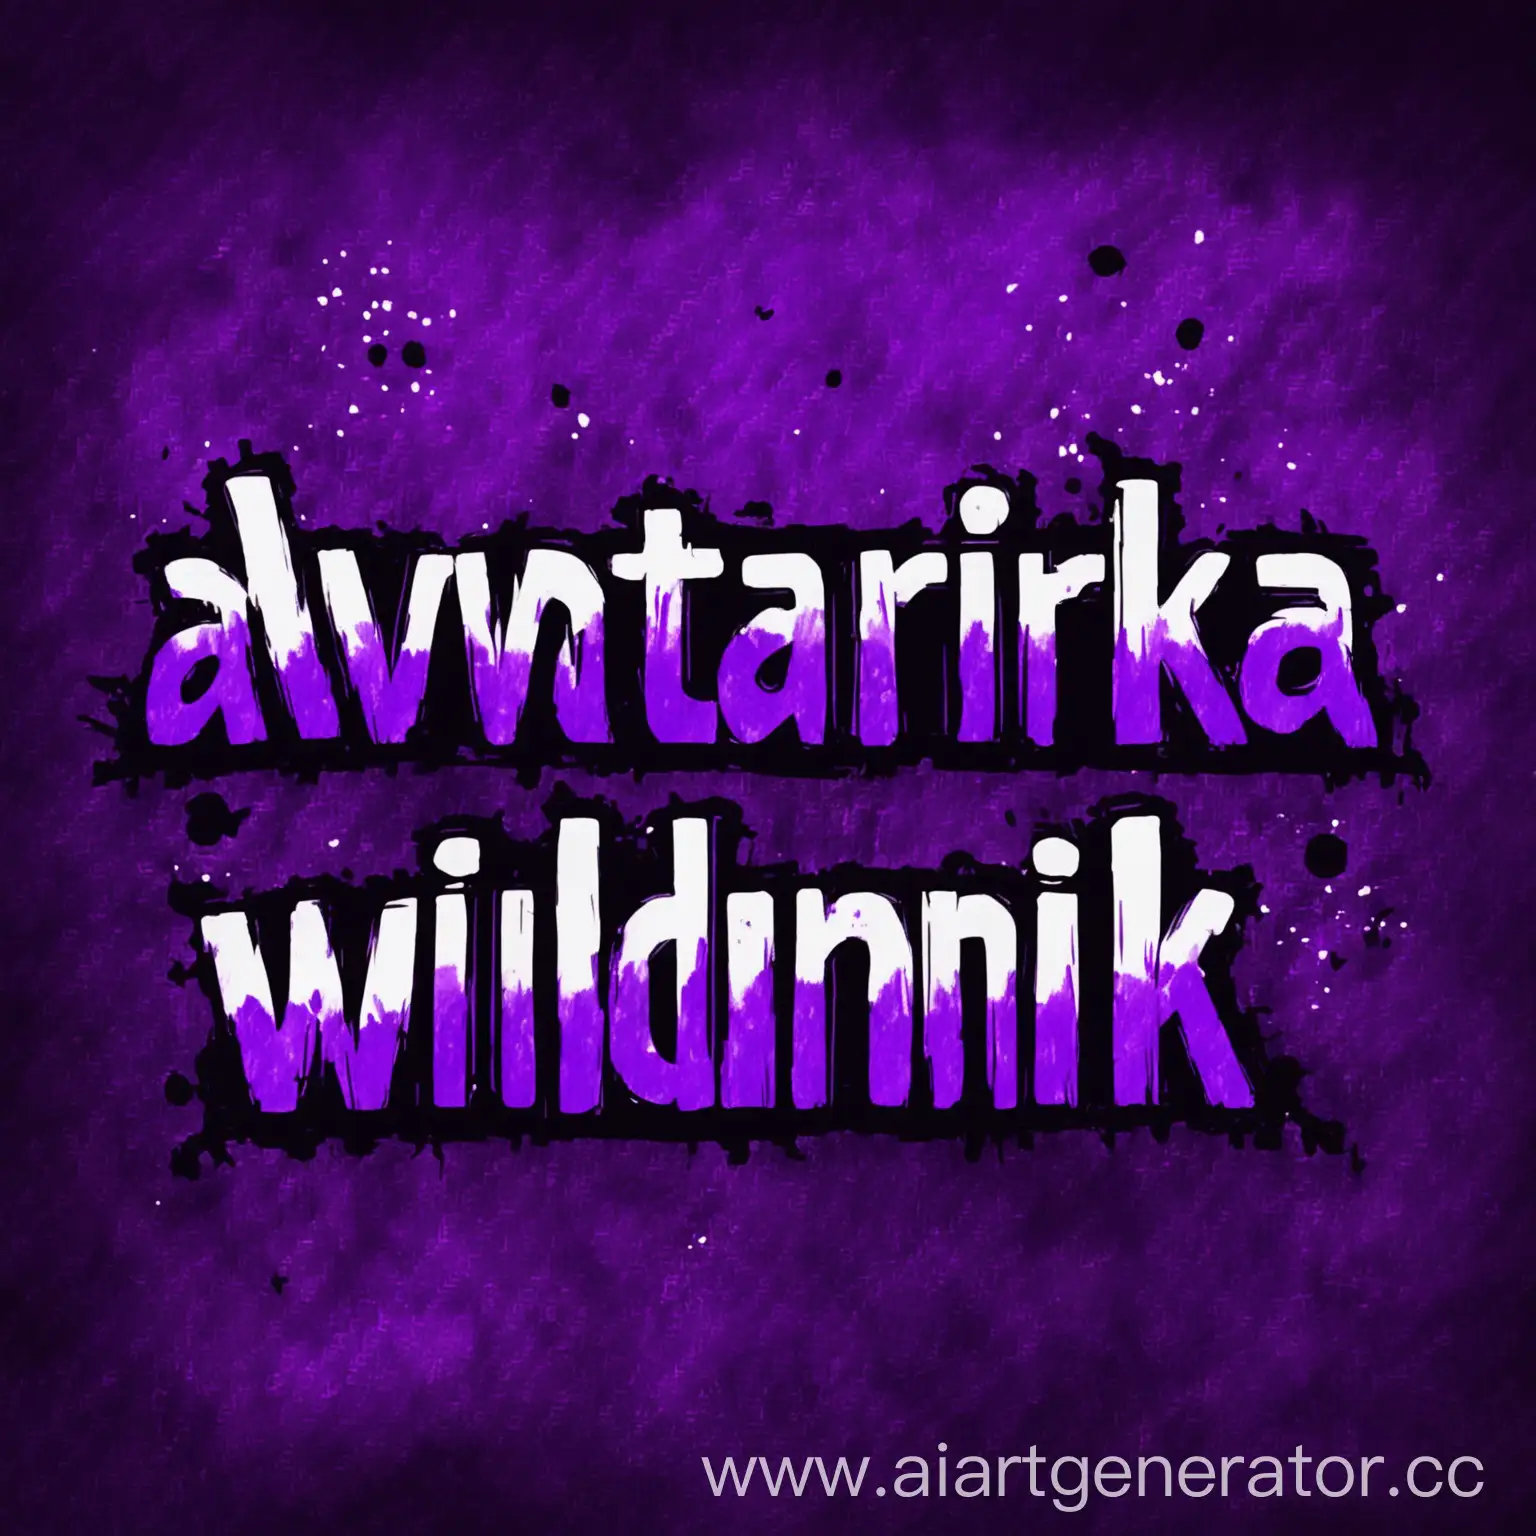 Avatar-Art-with-Wildneik-Inscription-in-Purple-Paints